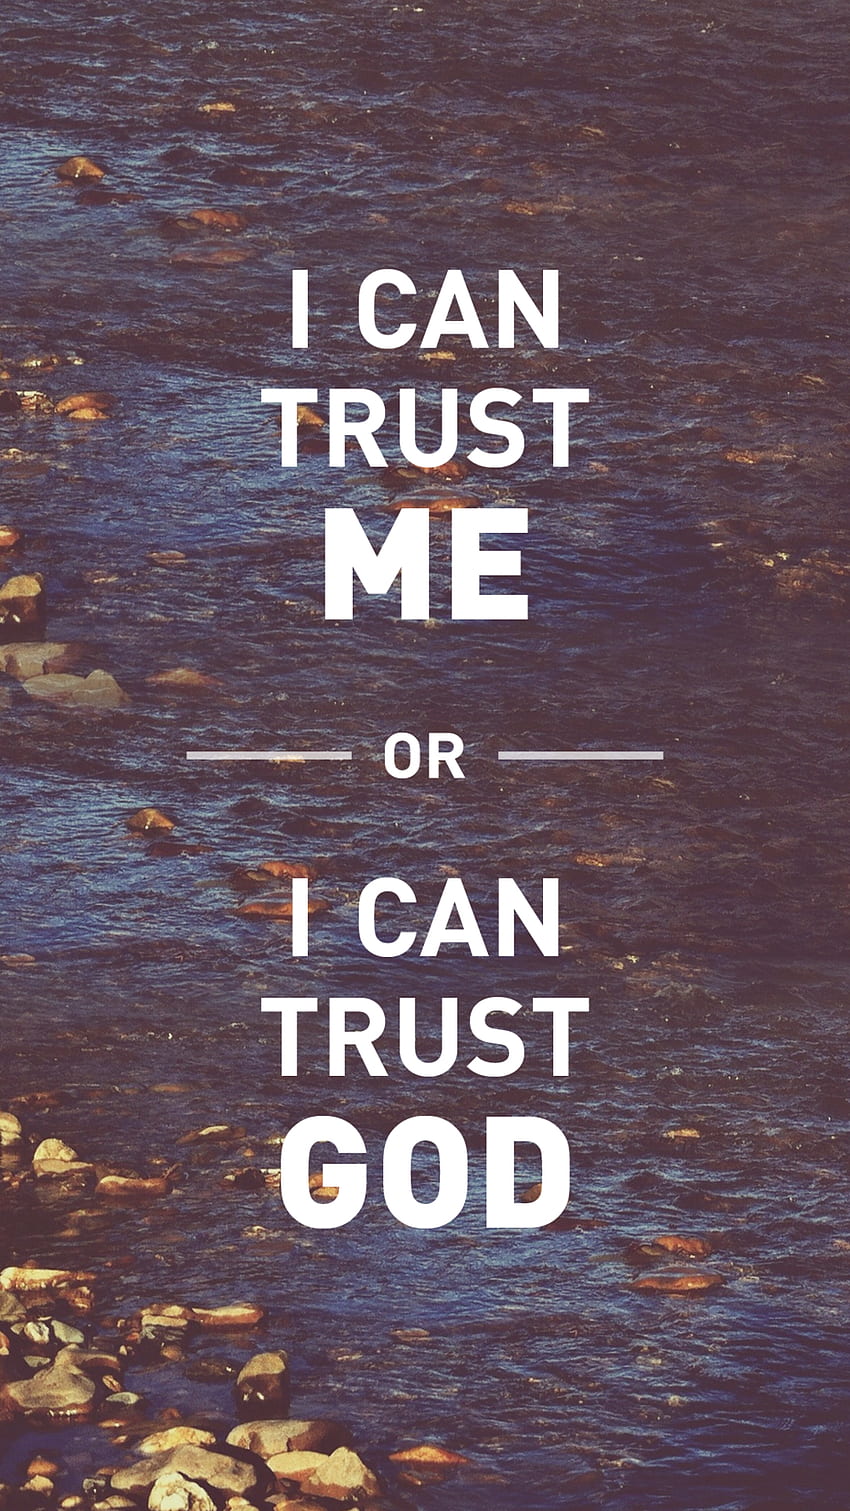 21 Bible Verses on Trusting God  Cru